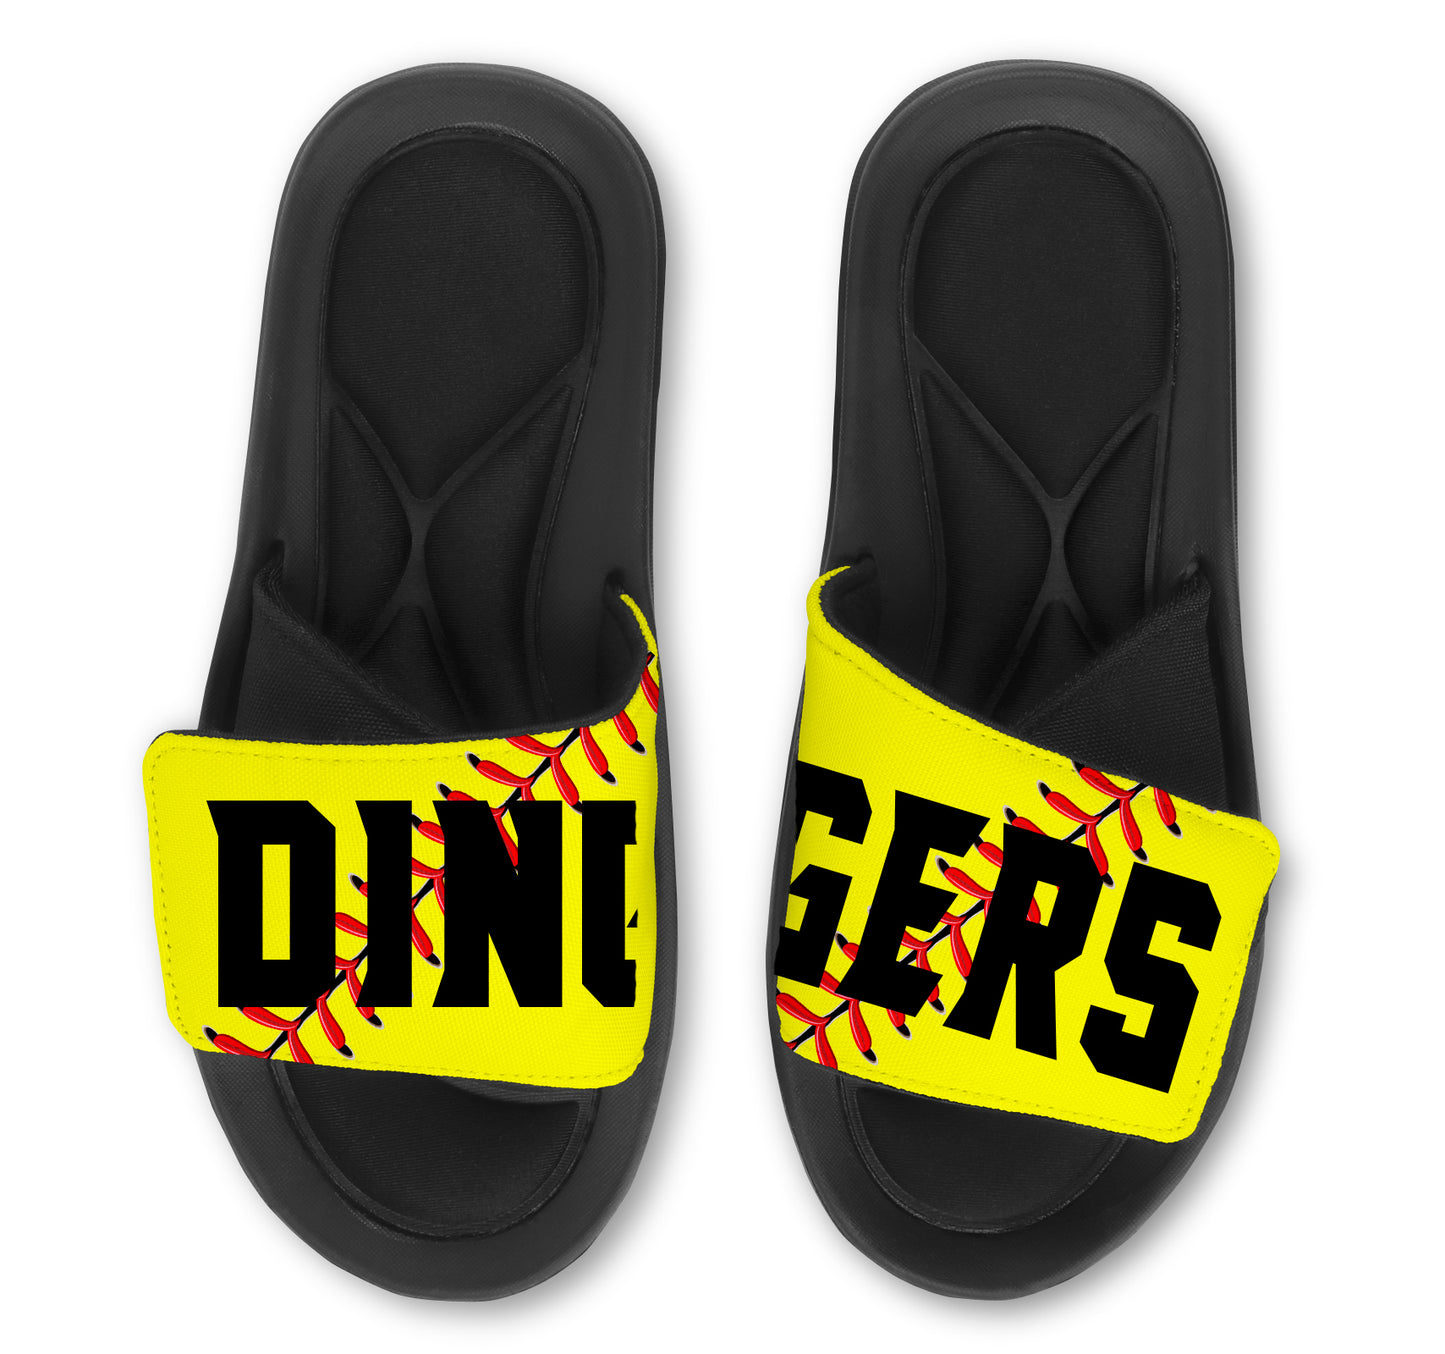 DINGERS Softball Slides Sandals - TEAM Softball Slides - FASTPITCH Slides